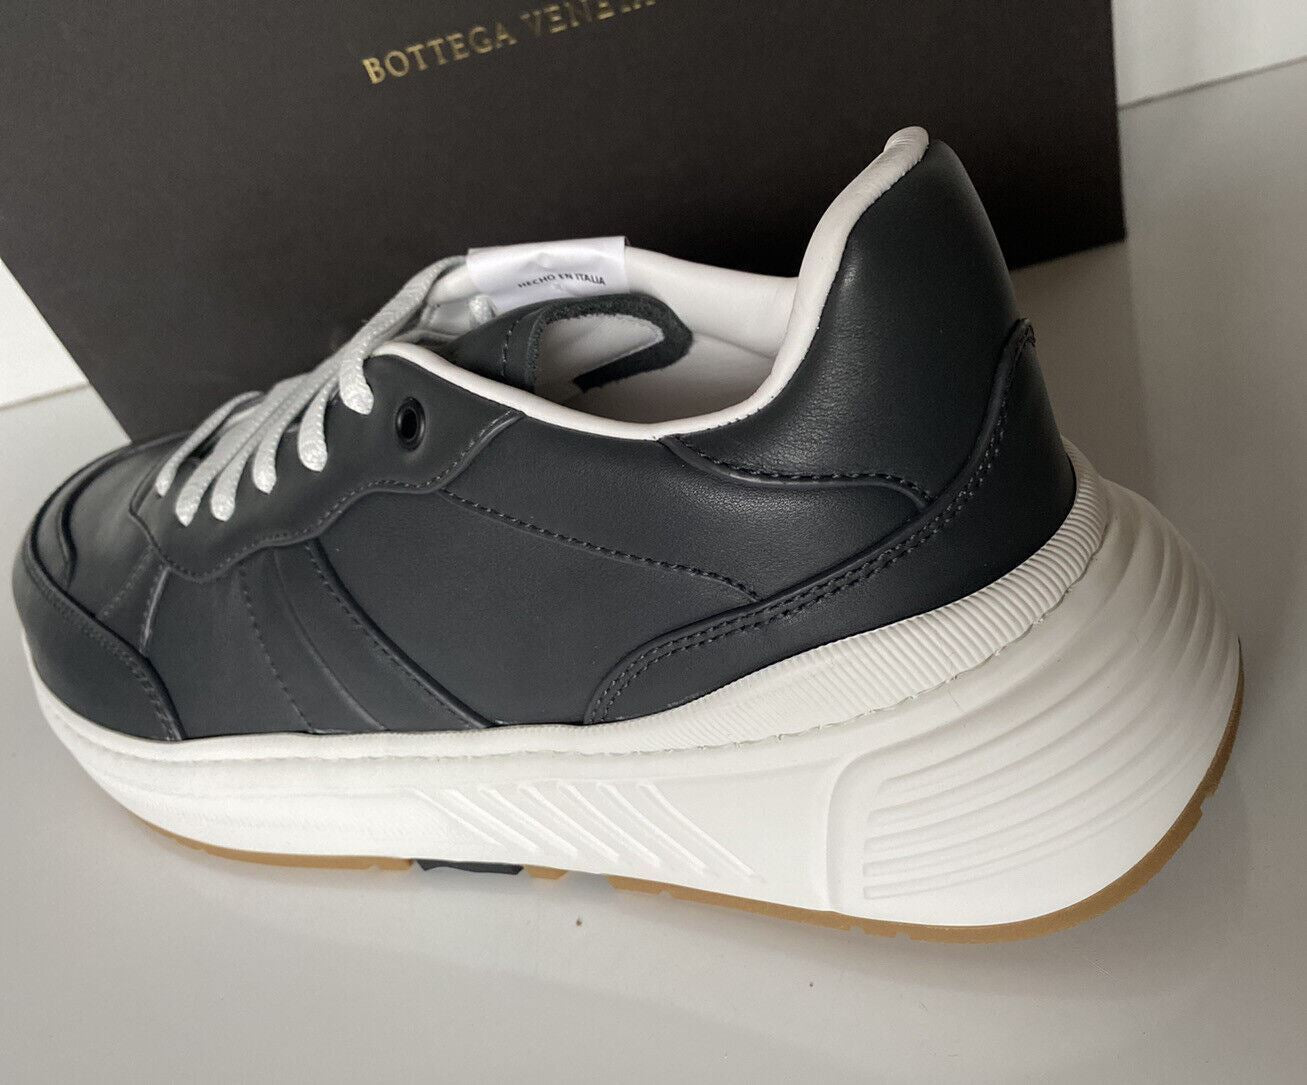 NIB $ 850 Bottega Veneta Herren-Sneaker aus grauem Kalbsleder 7,5 US 565646 2015 